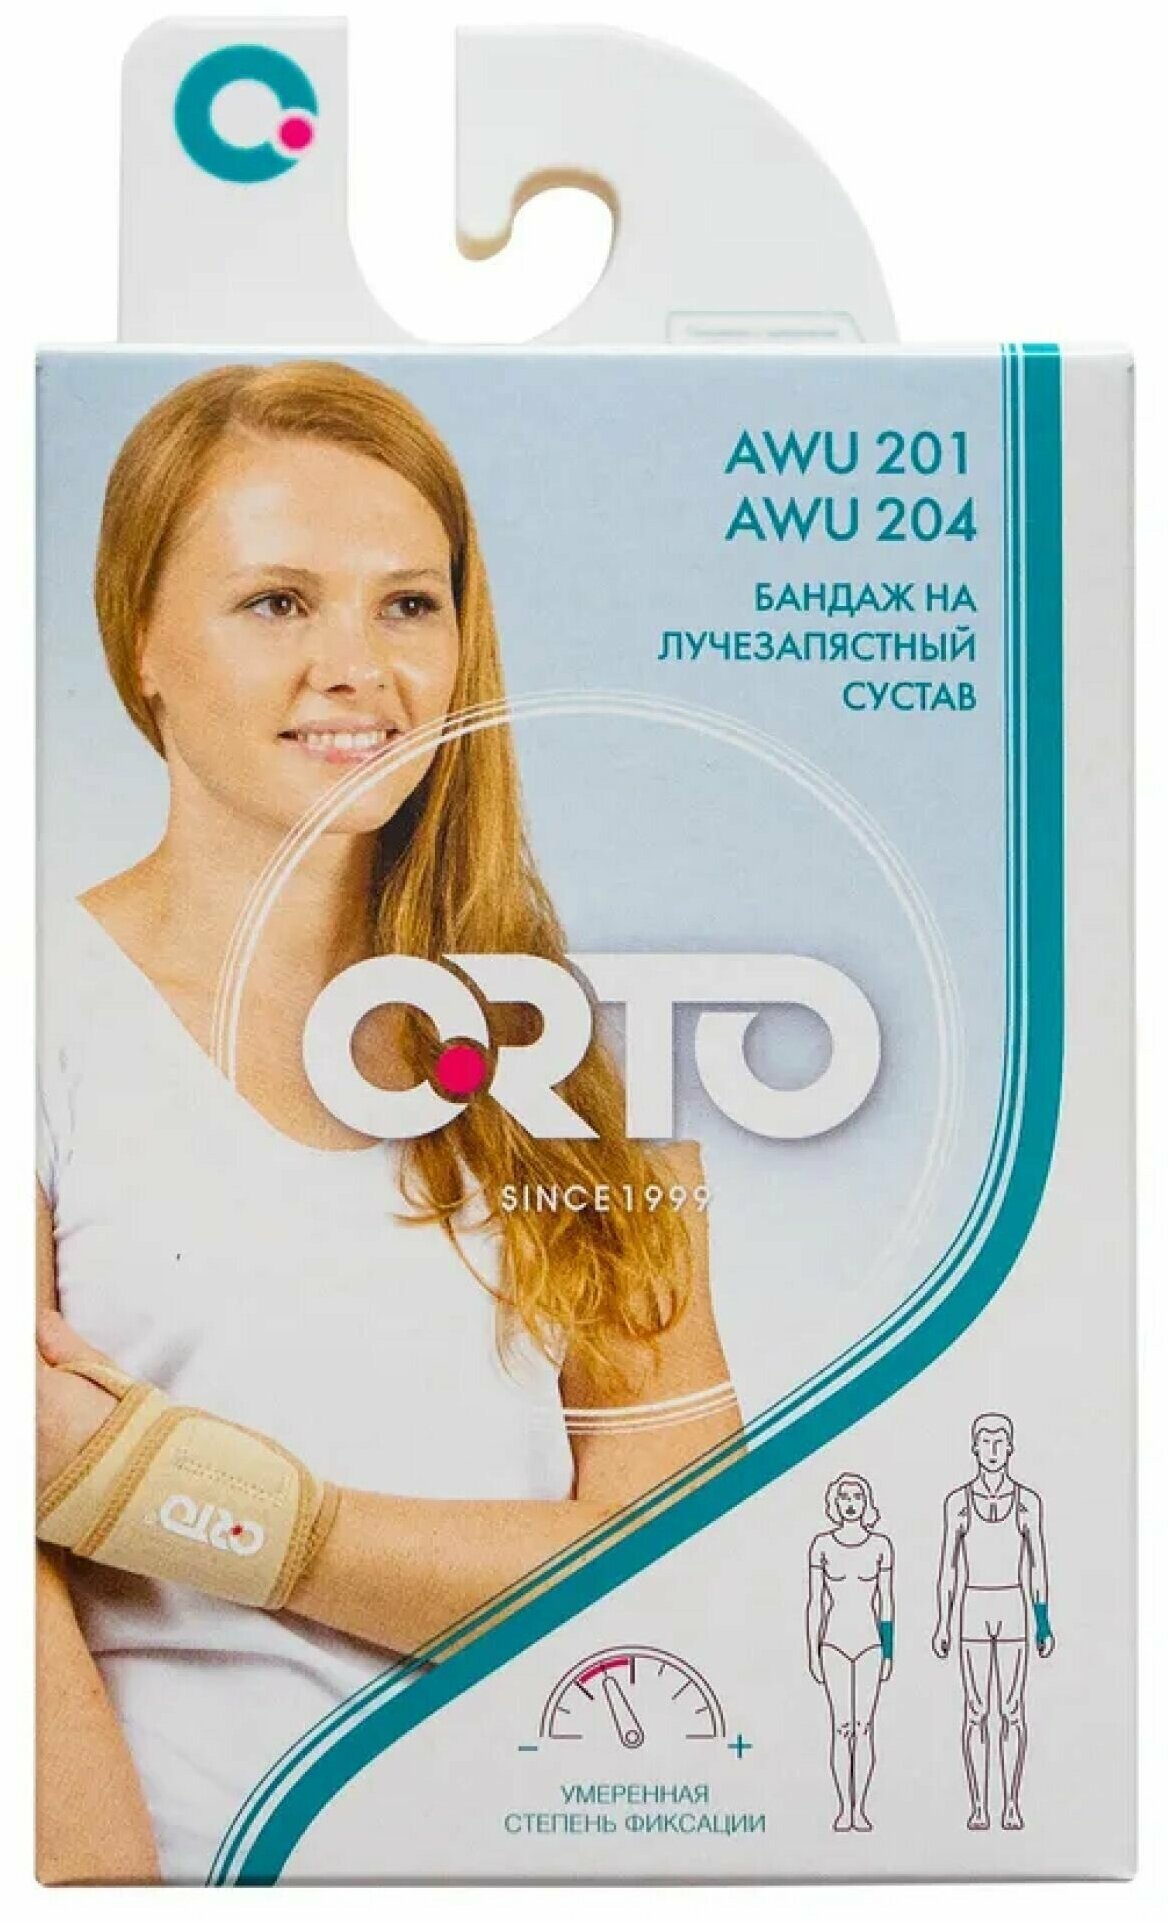 Бандаж на лучезапястный сустав Orto AWU 204